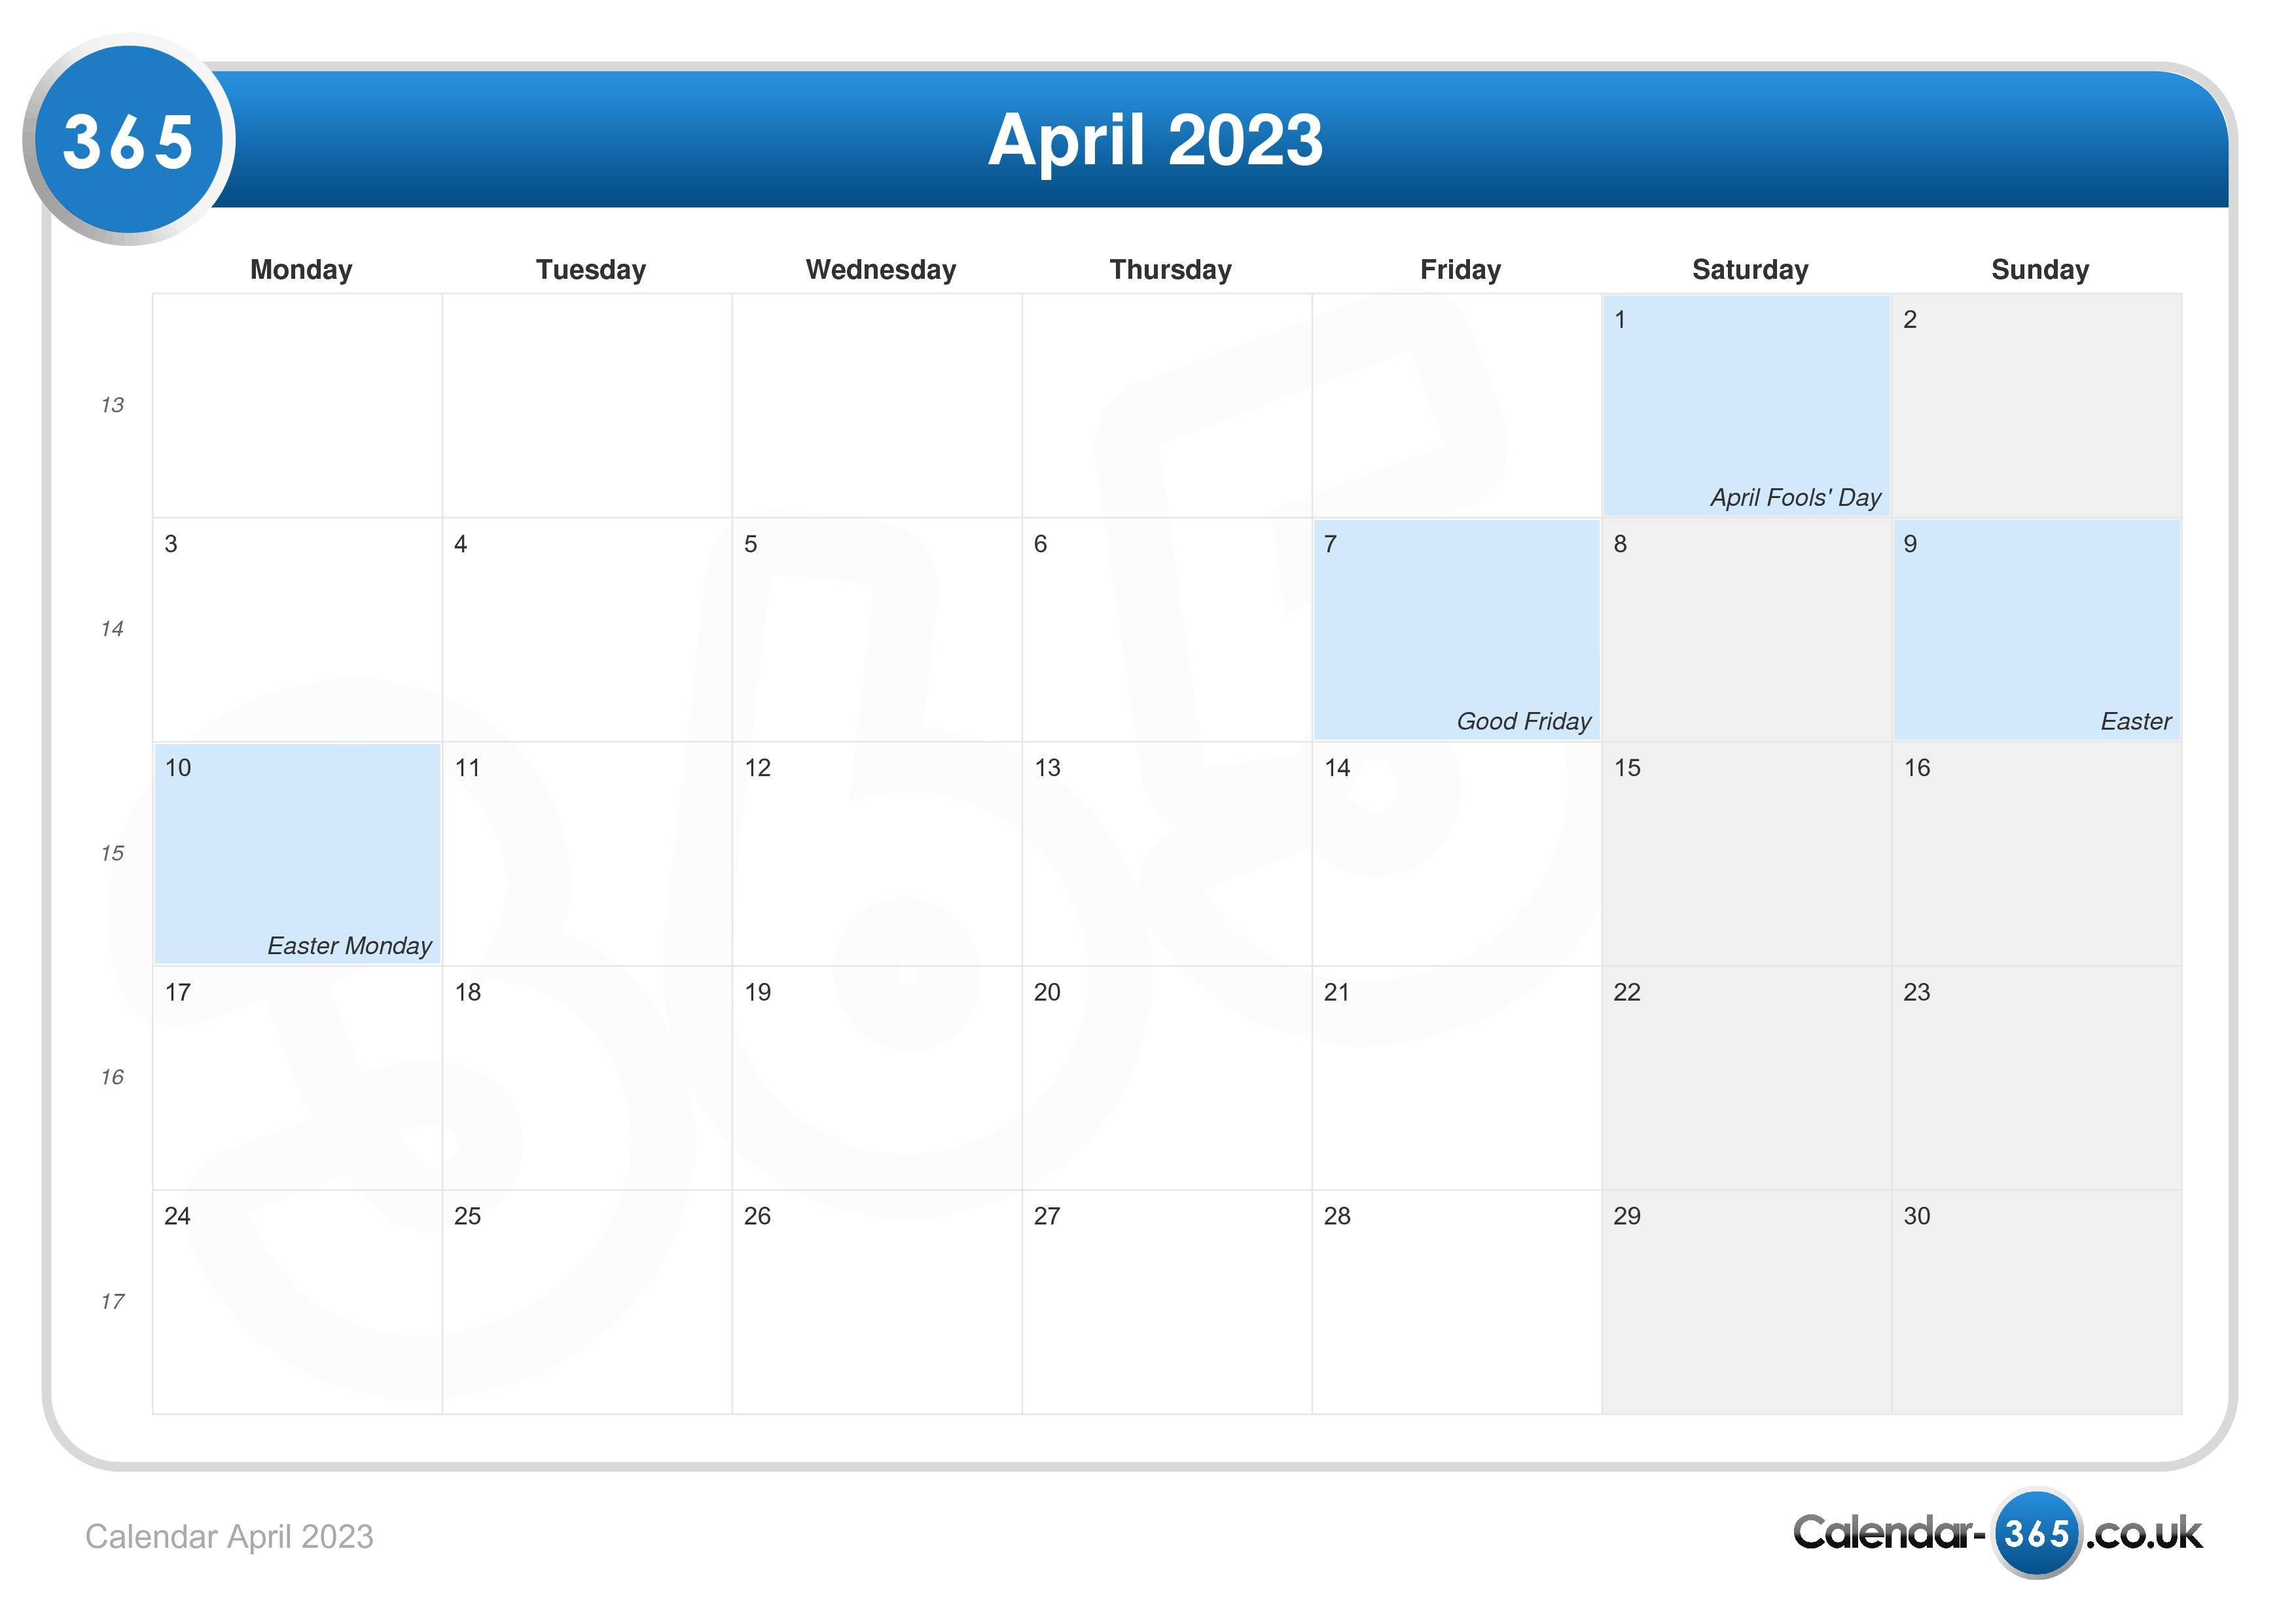 Calendar April 2023